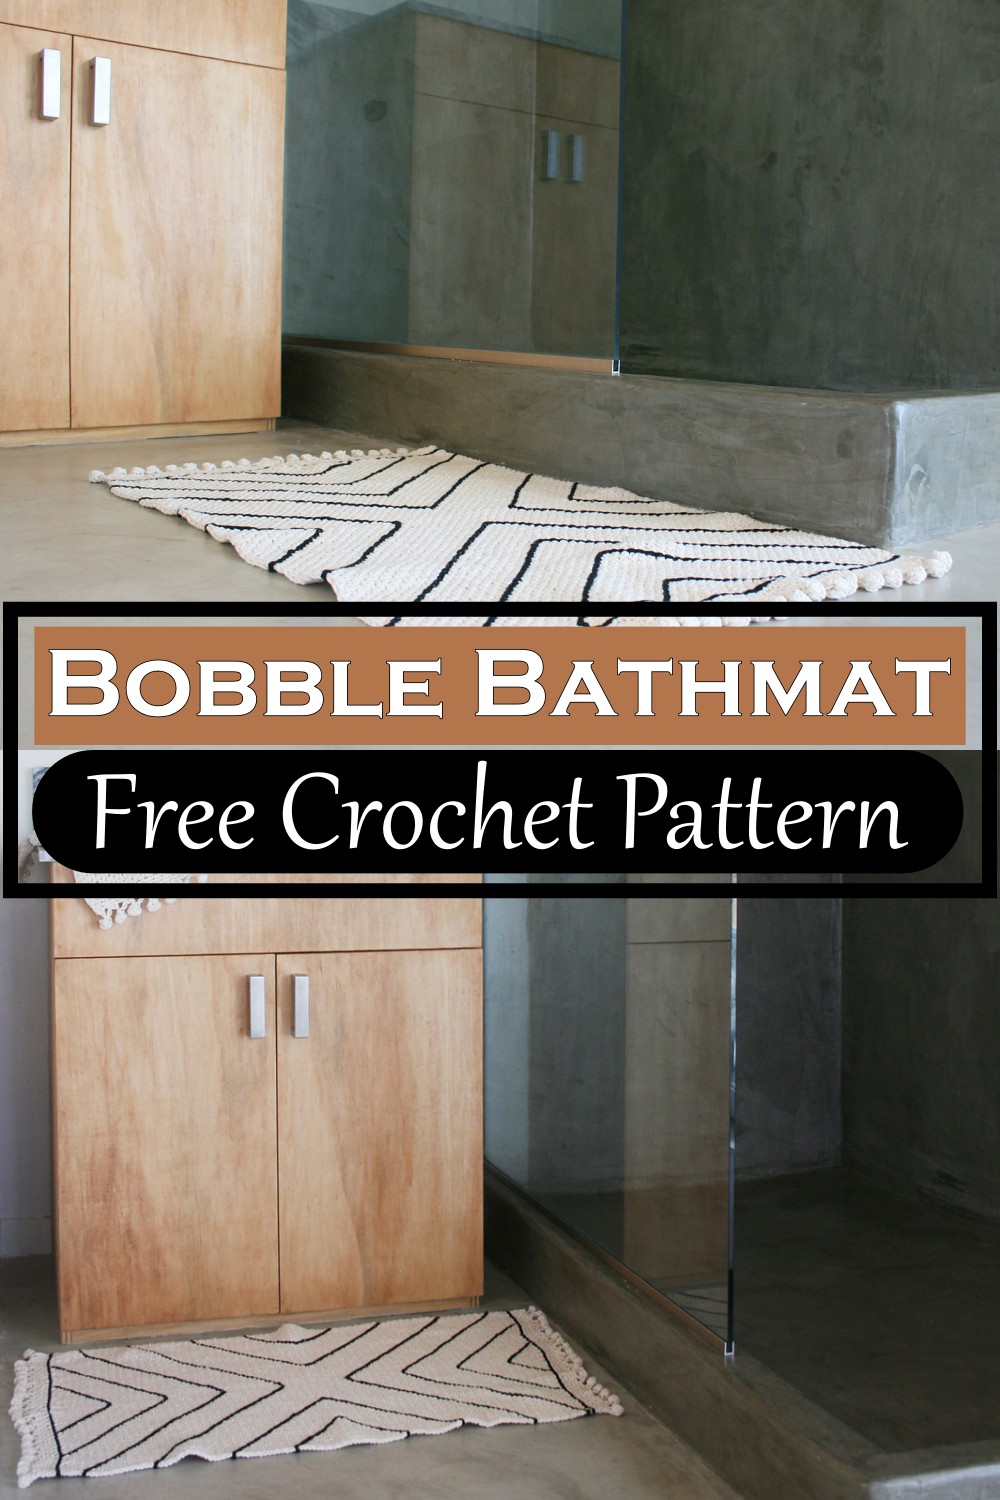 Bobble Bathmat